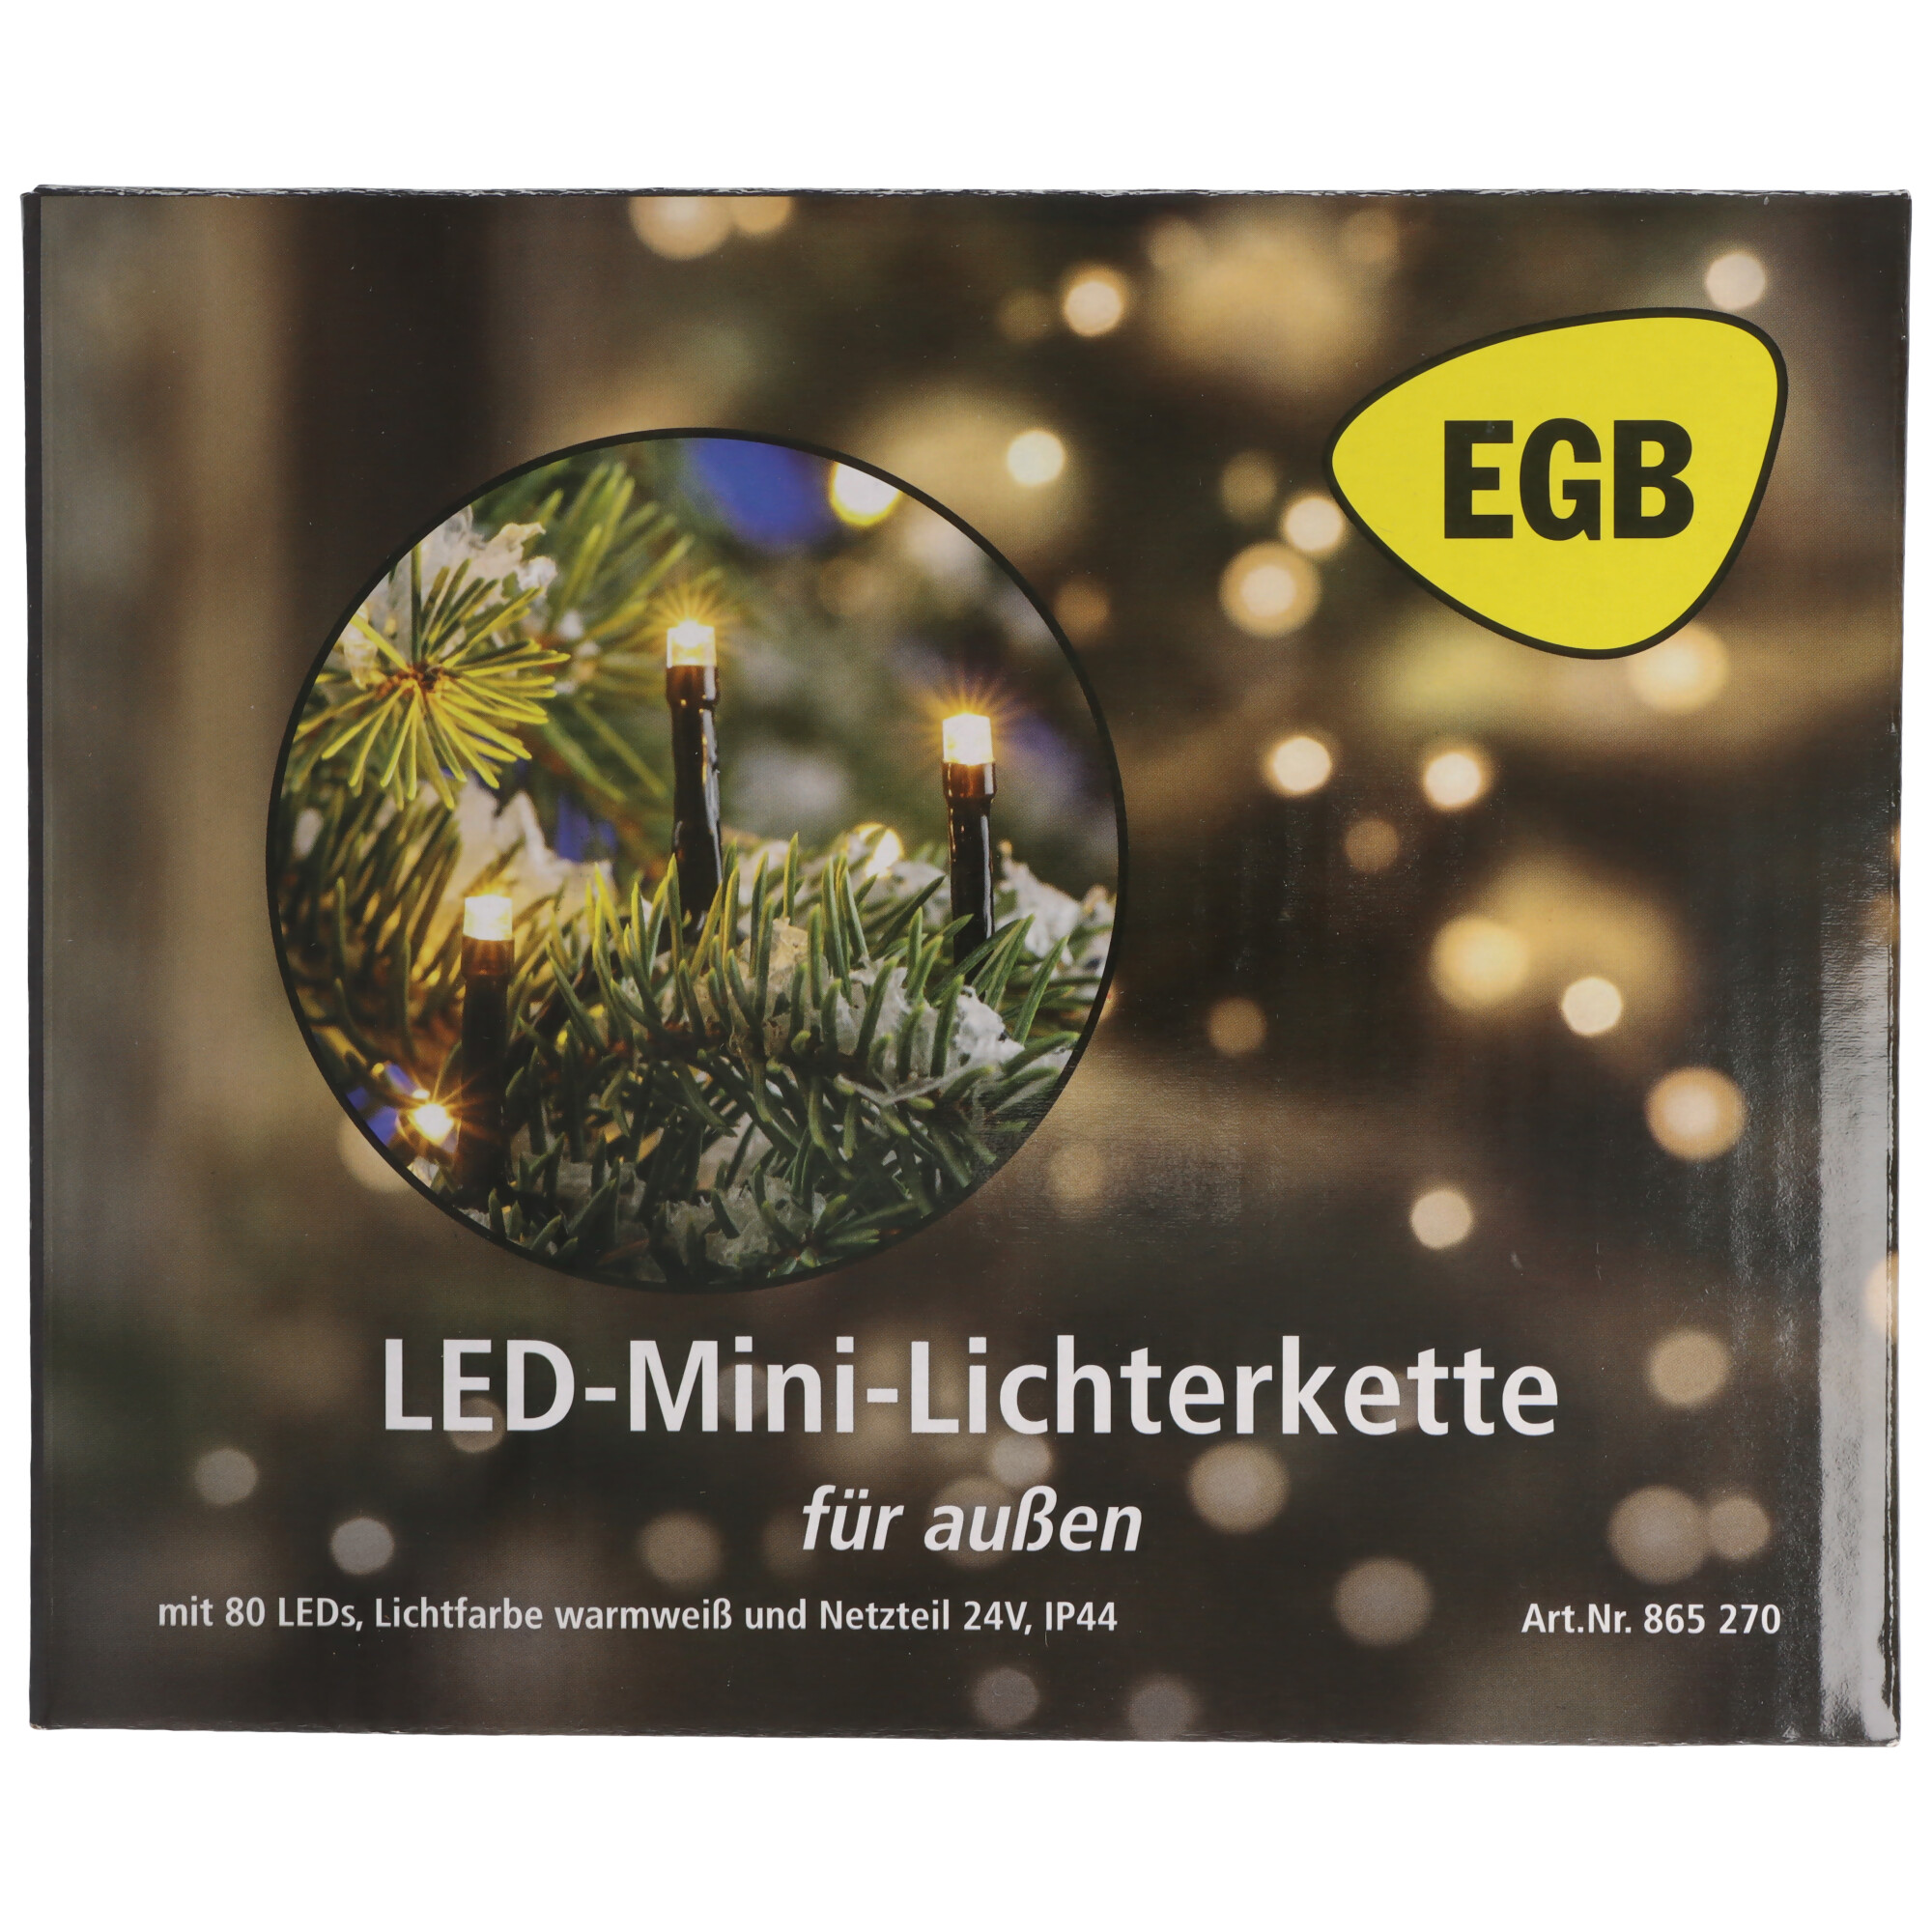 EGB LED-Mini-Lichterkette 80 flg. warmweiß